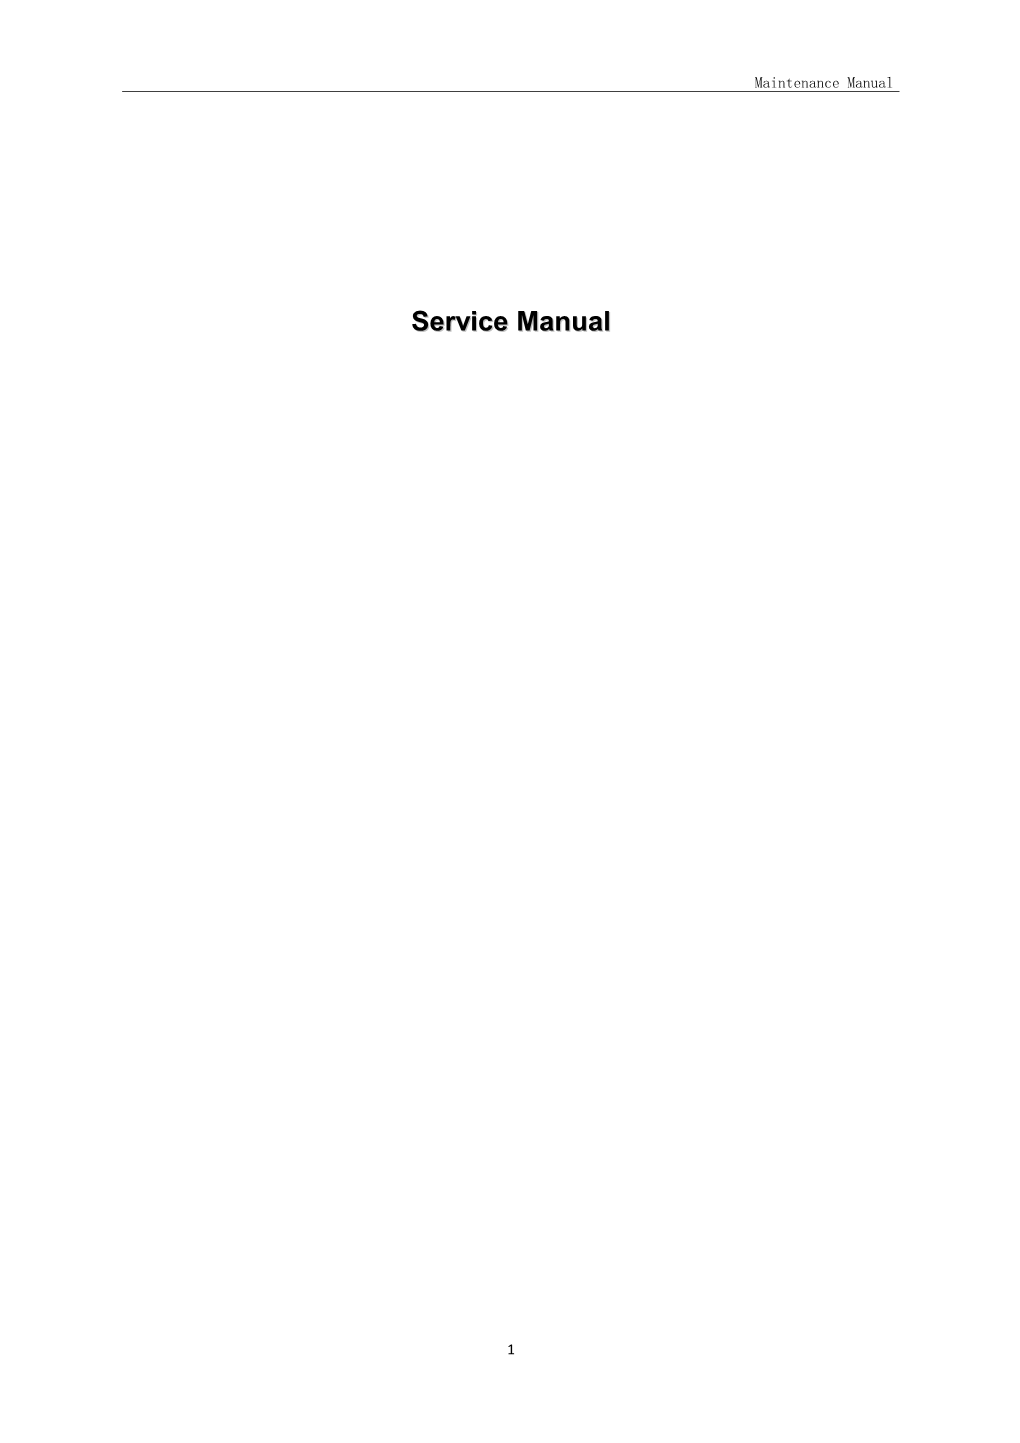 Maintenance Manual s1